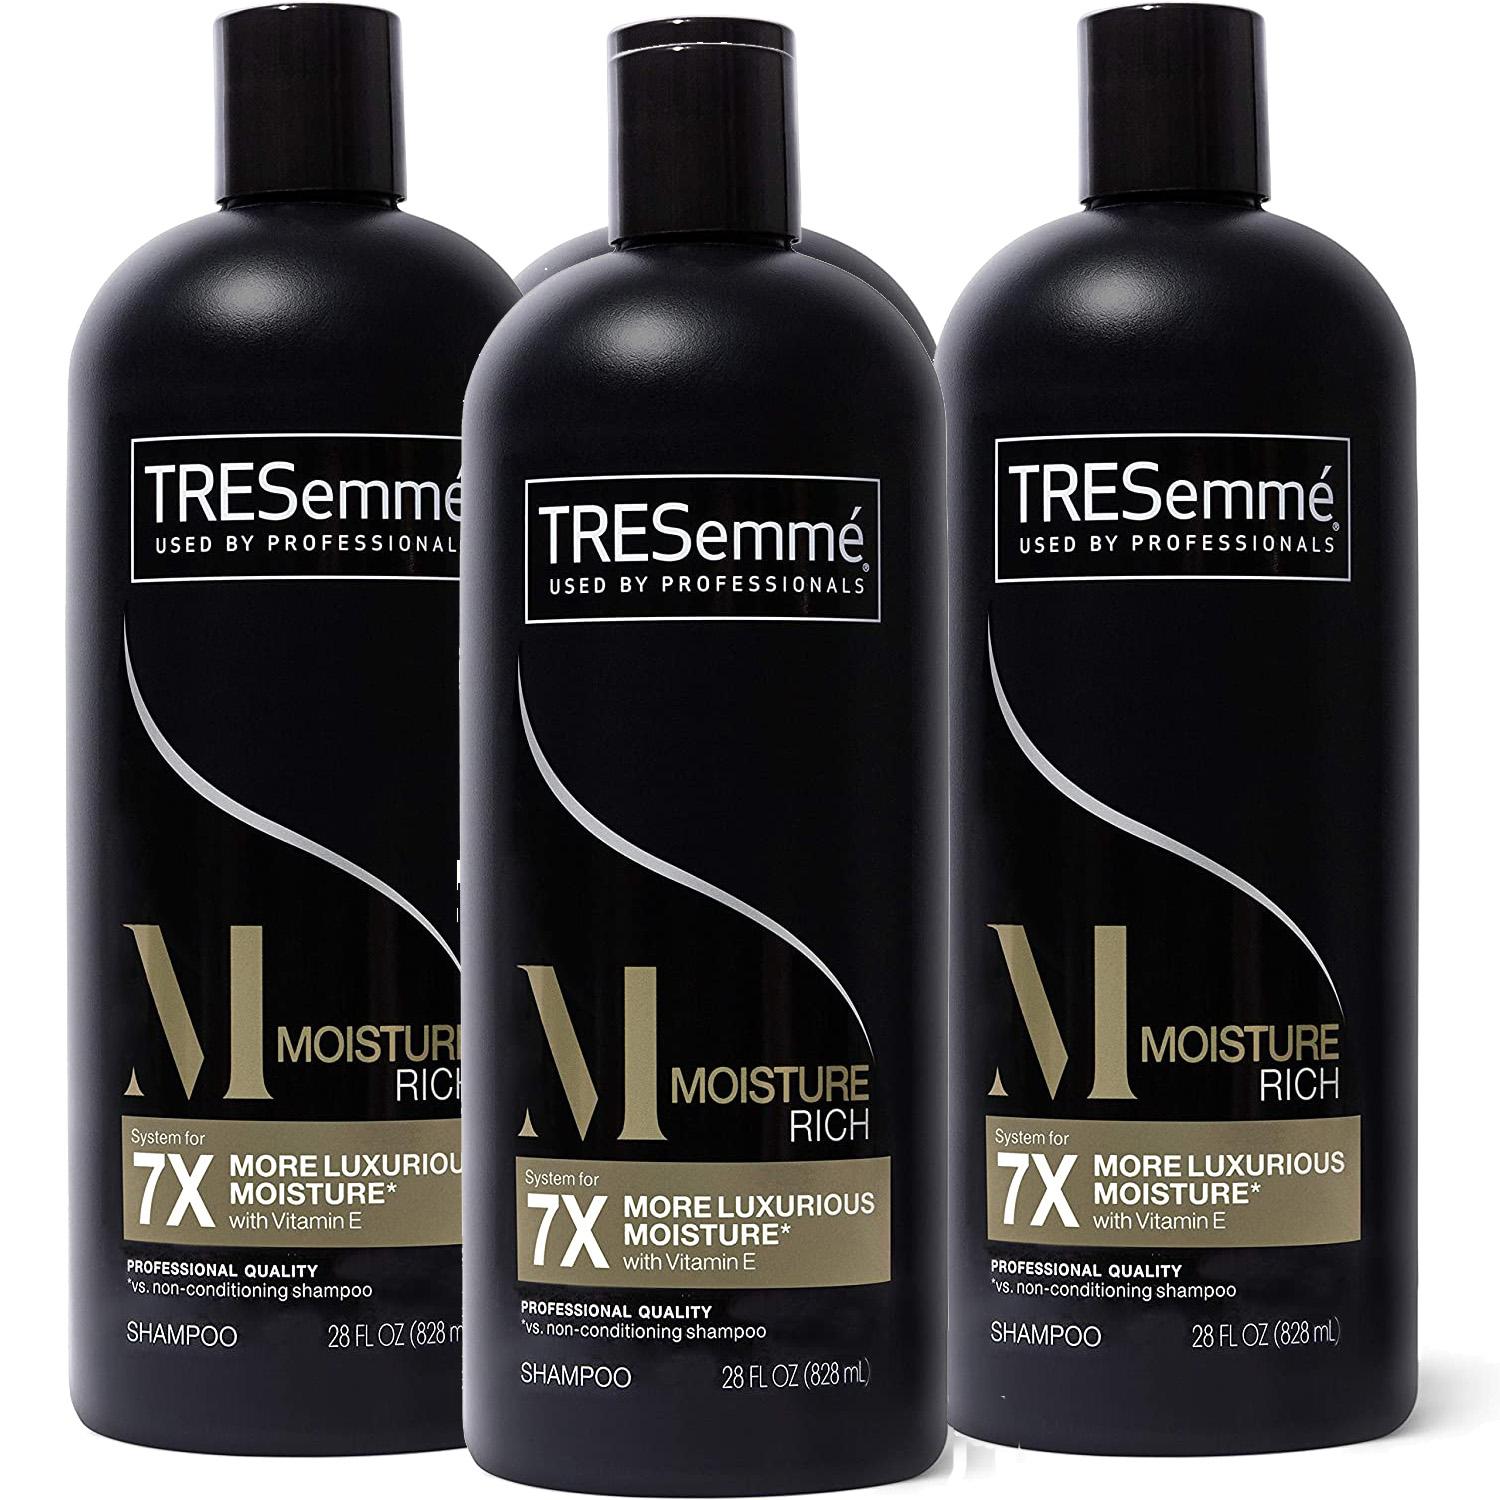 3x TRESemme Moisturizing Shampoo with Vitamin E for $6.37 Shipped